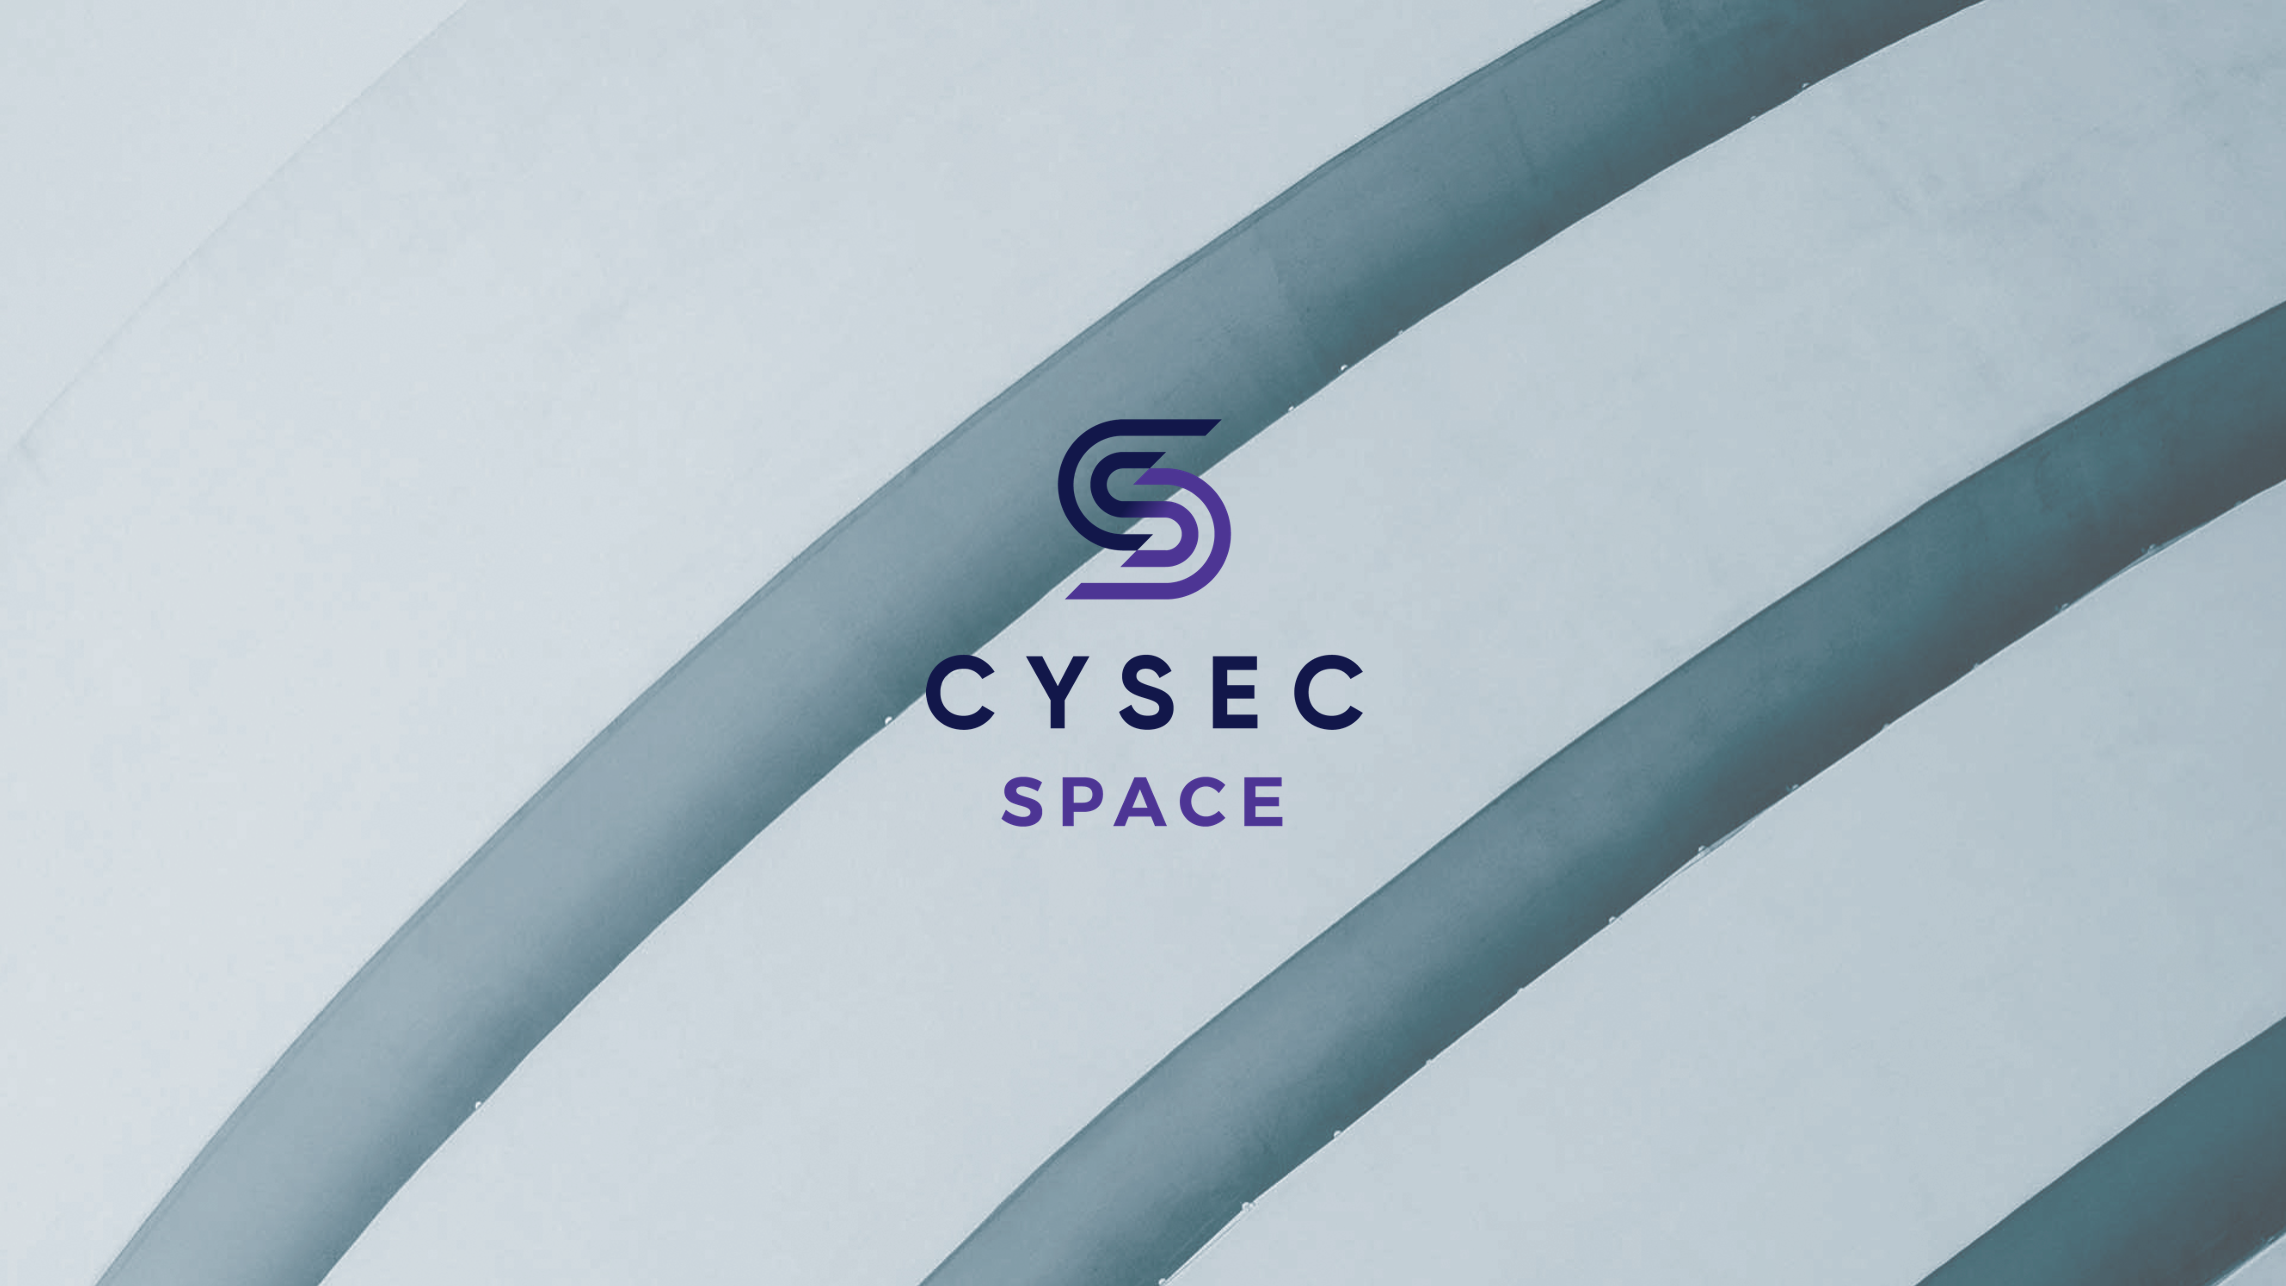 CYSEC space